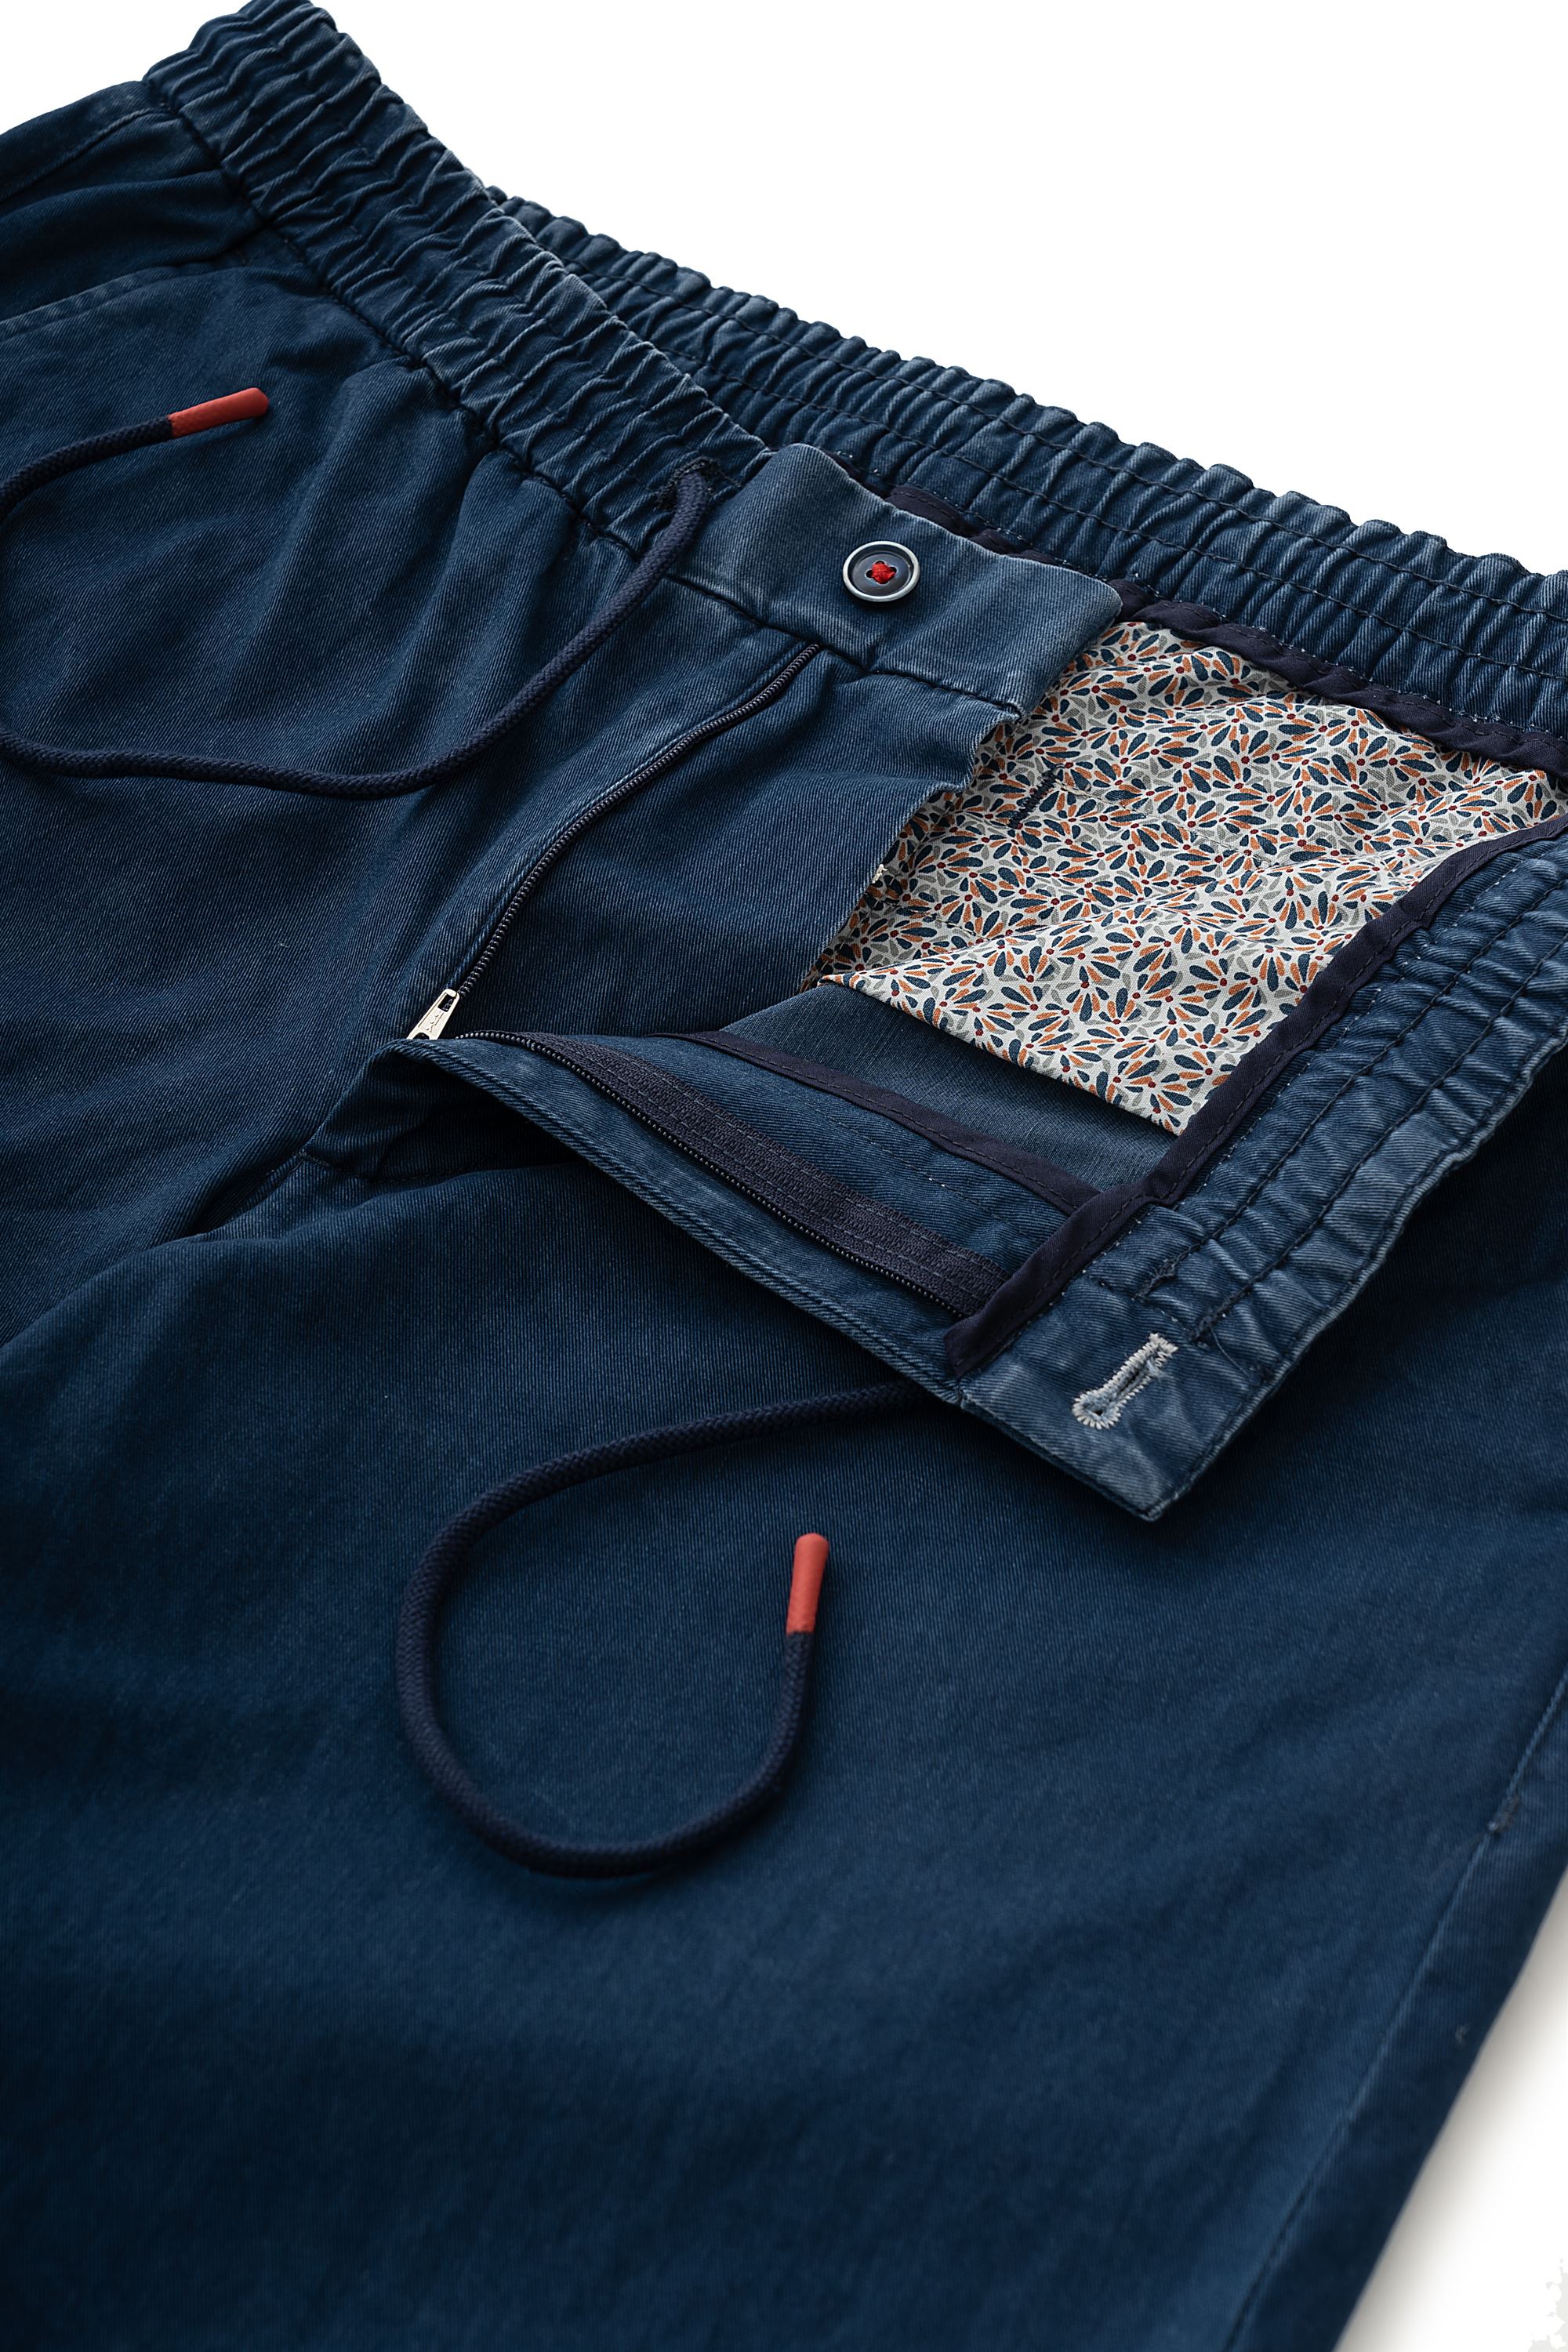 Chilton Blue Cotton Drawstring Trousers